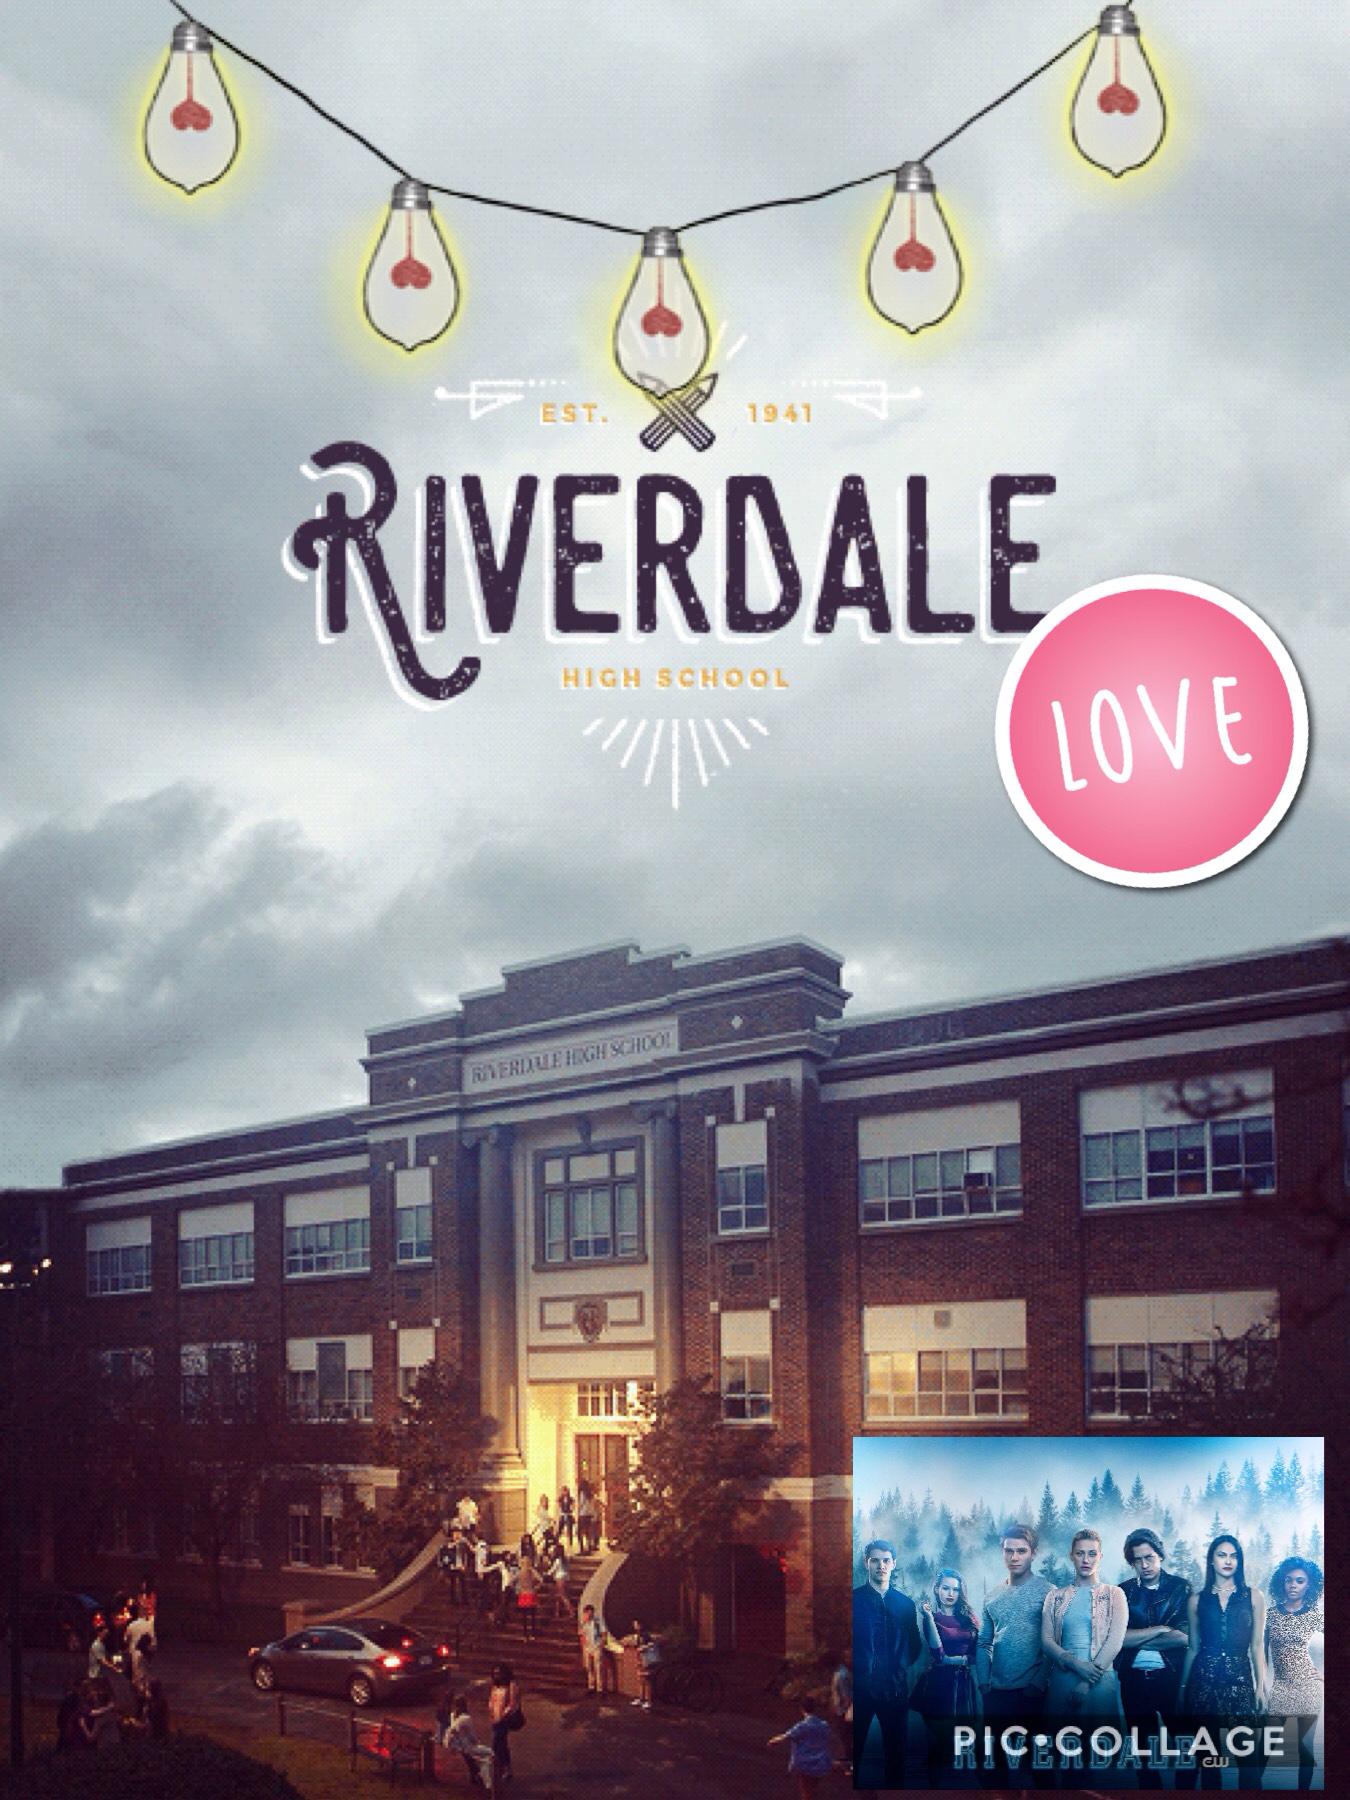 #Riverdale 4 life